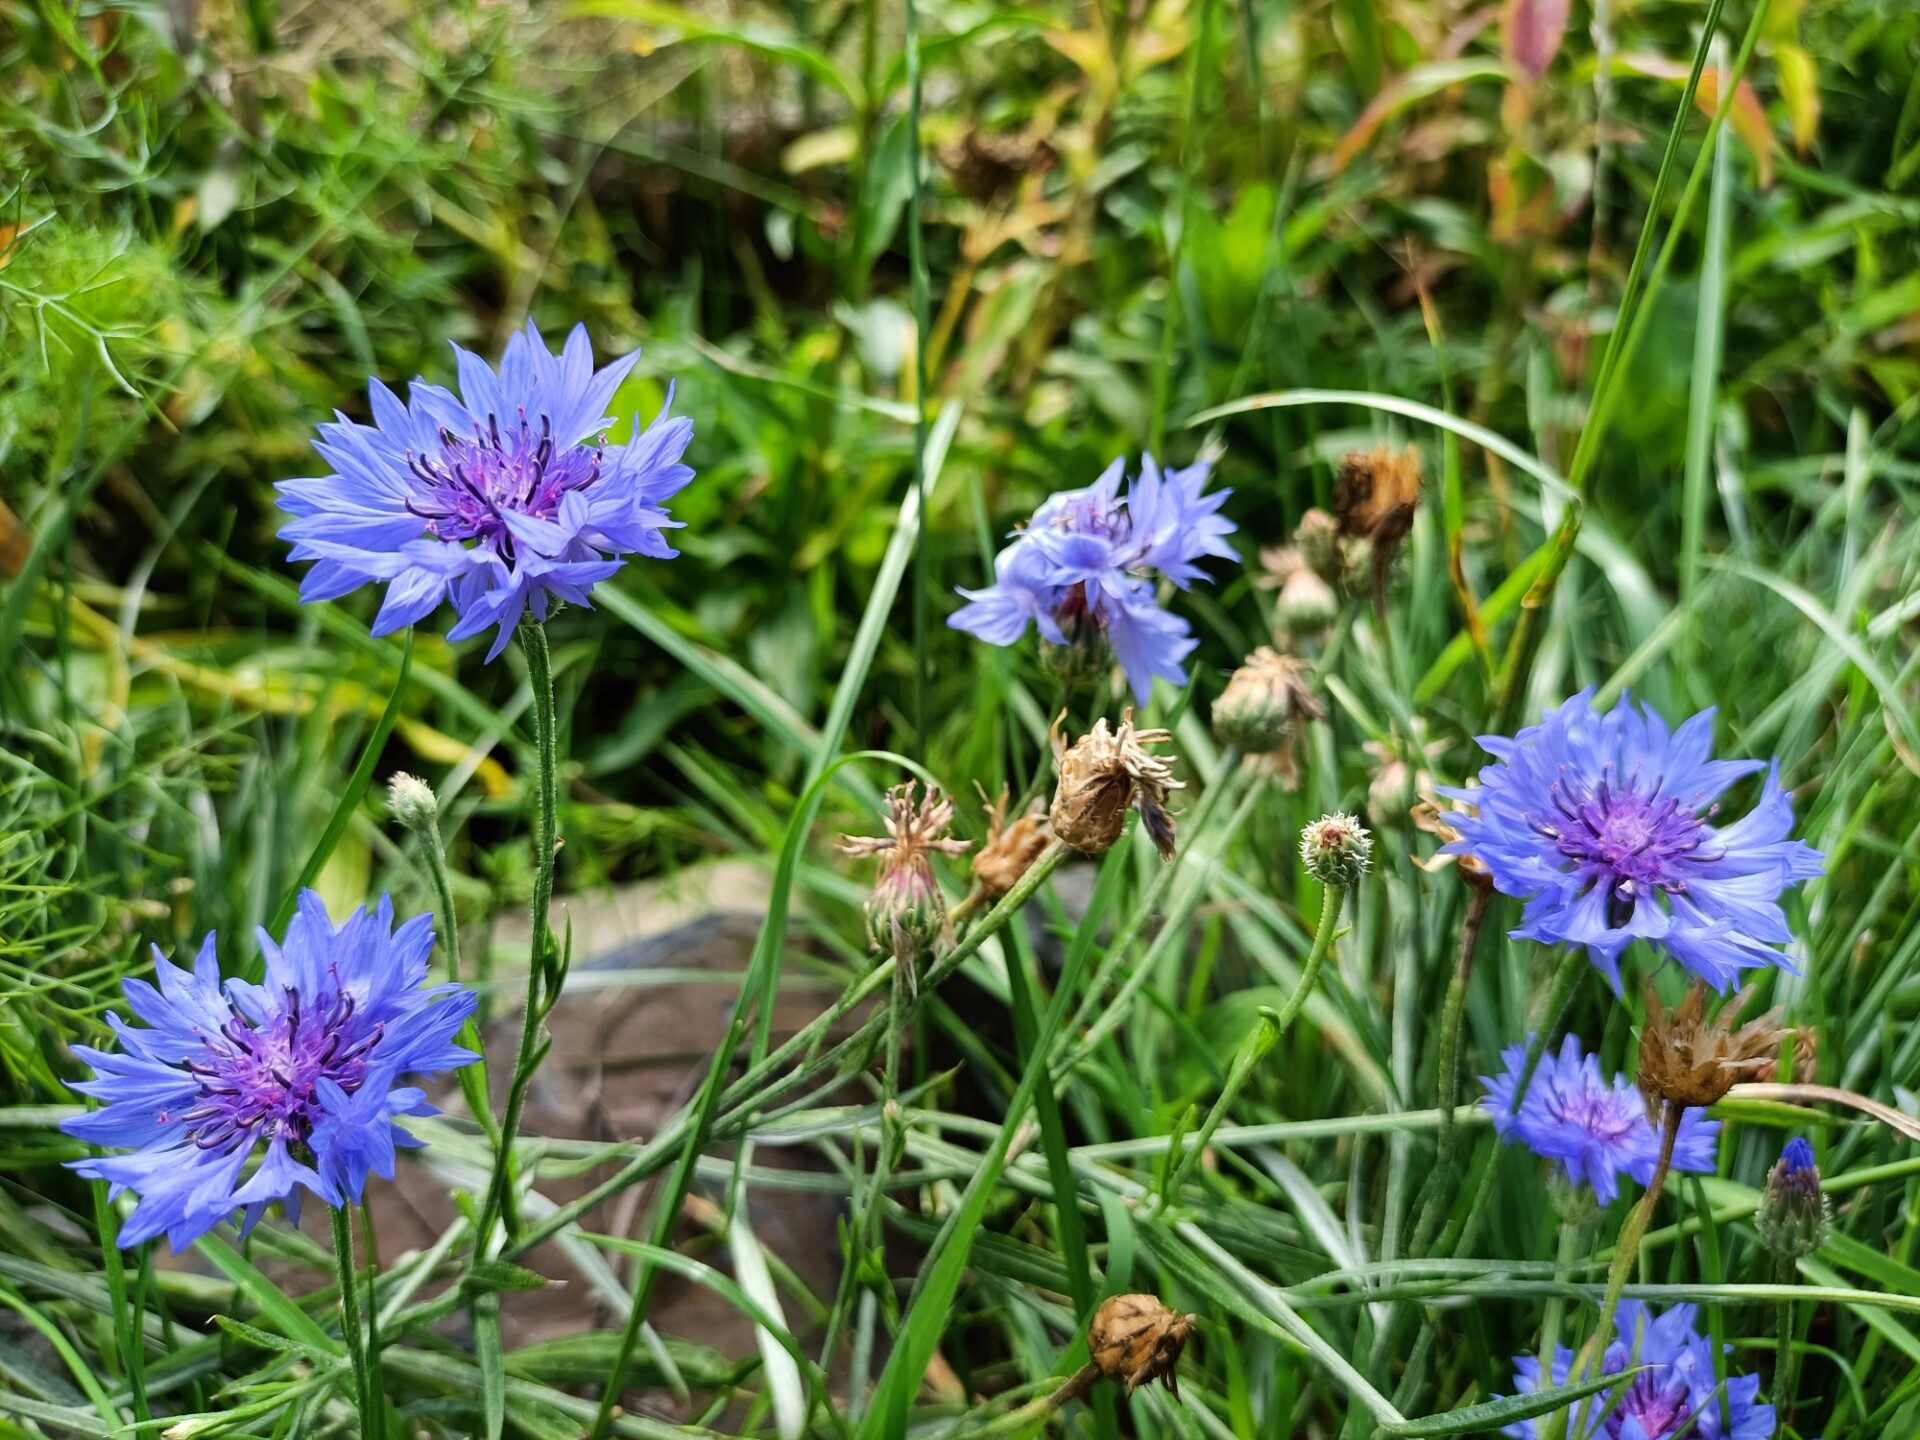 Blue Cornflowers